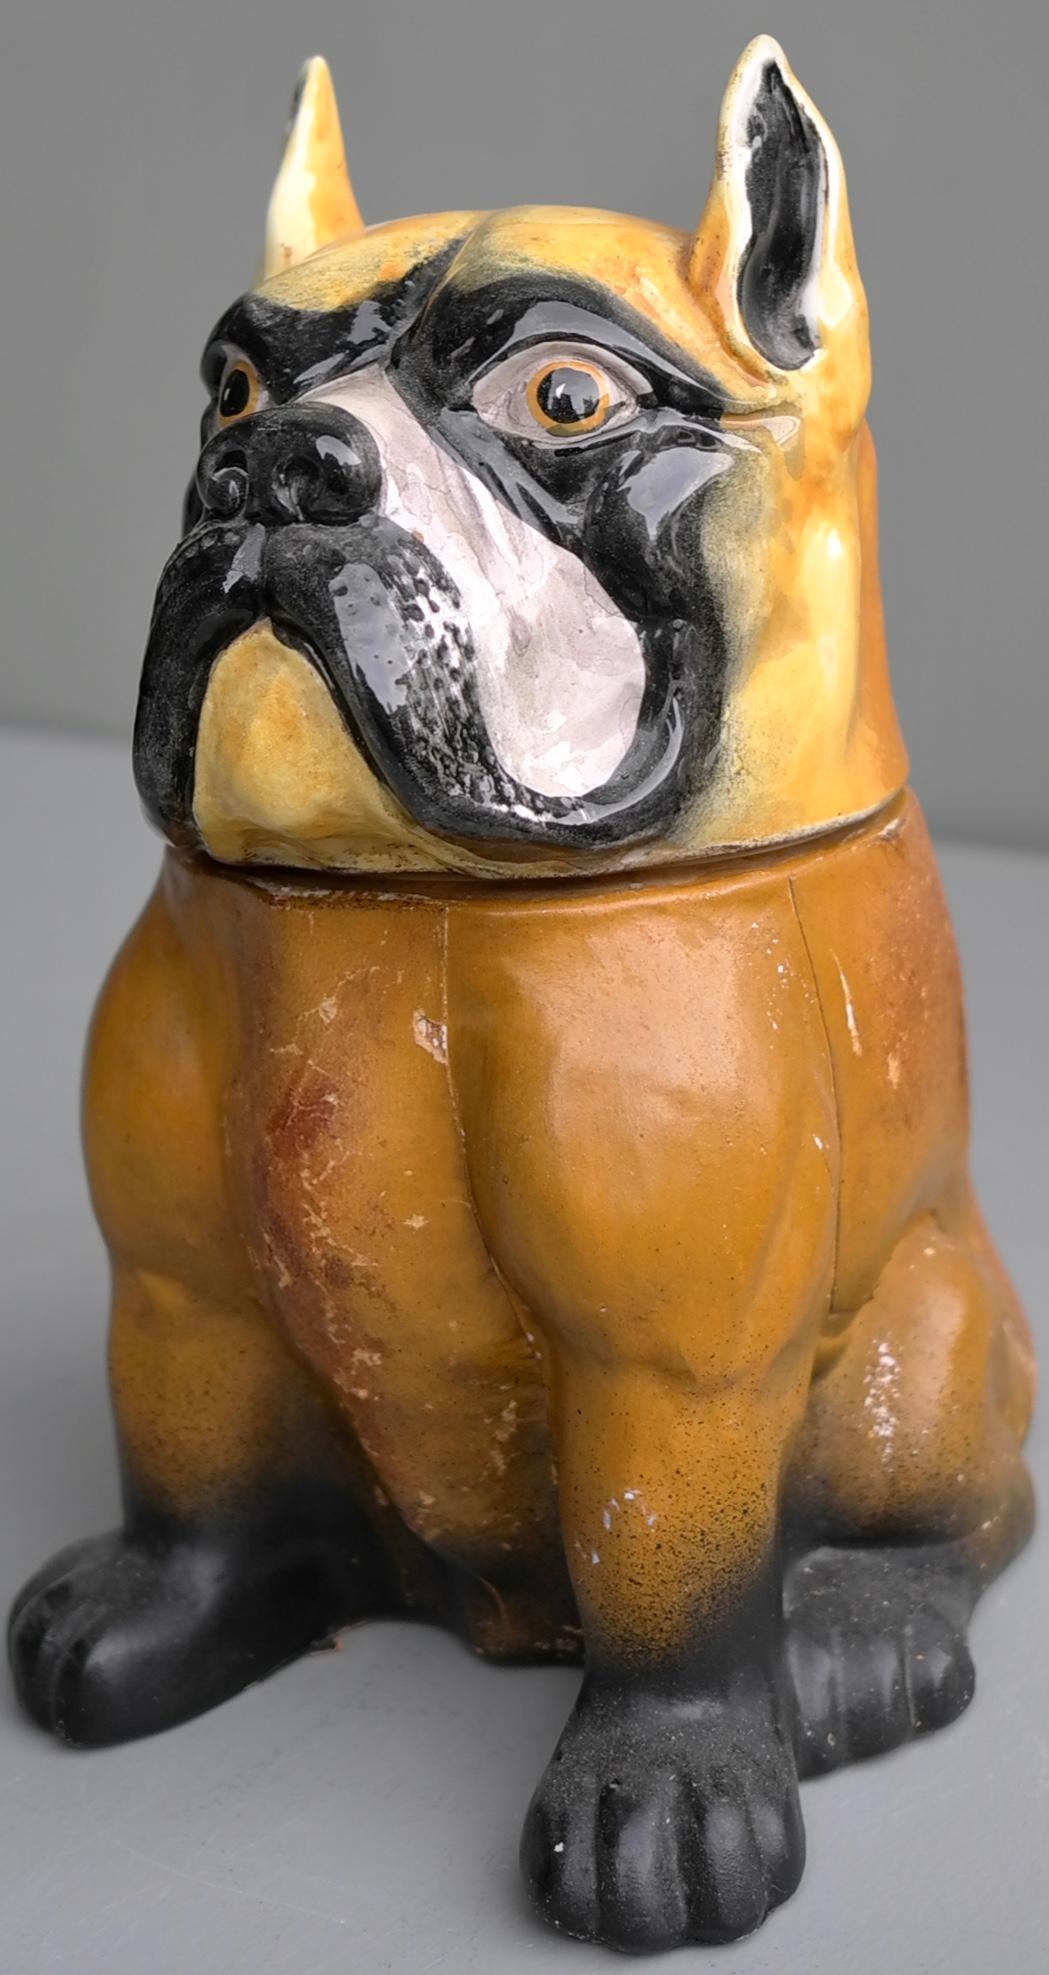 Decorative Bulldog Glazed Ceramic and Leather Sculpture Cookie Jar, 1960s For Sale 1